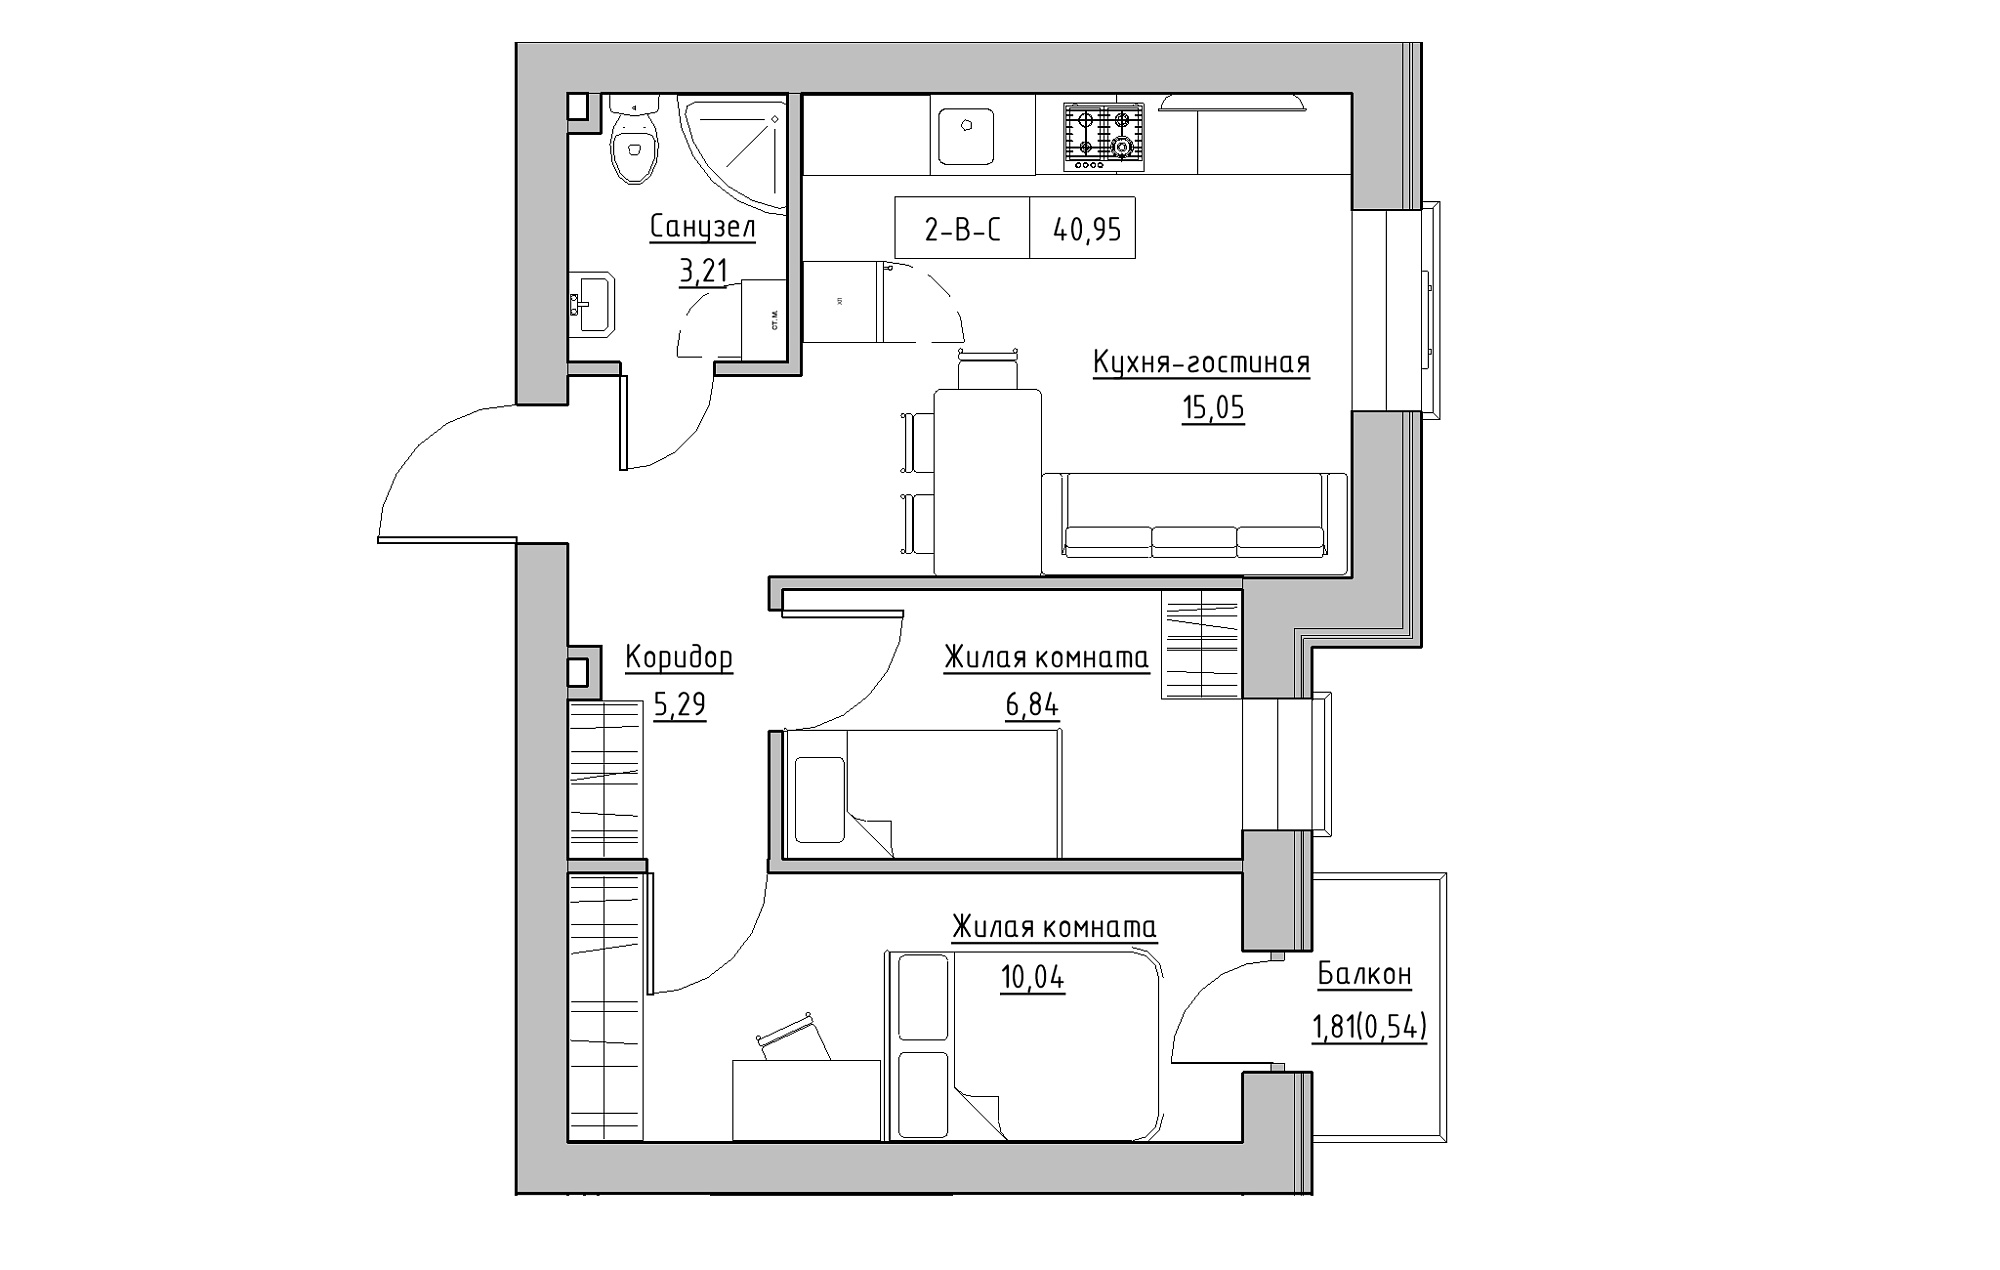 Planning 2-rm flats area 40.95m2, KS-018-03/0010.